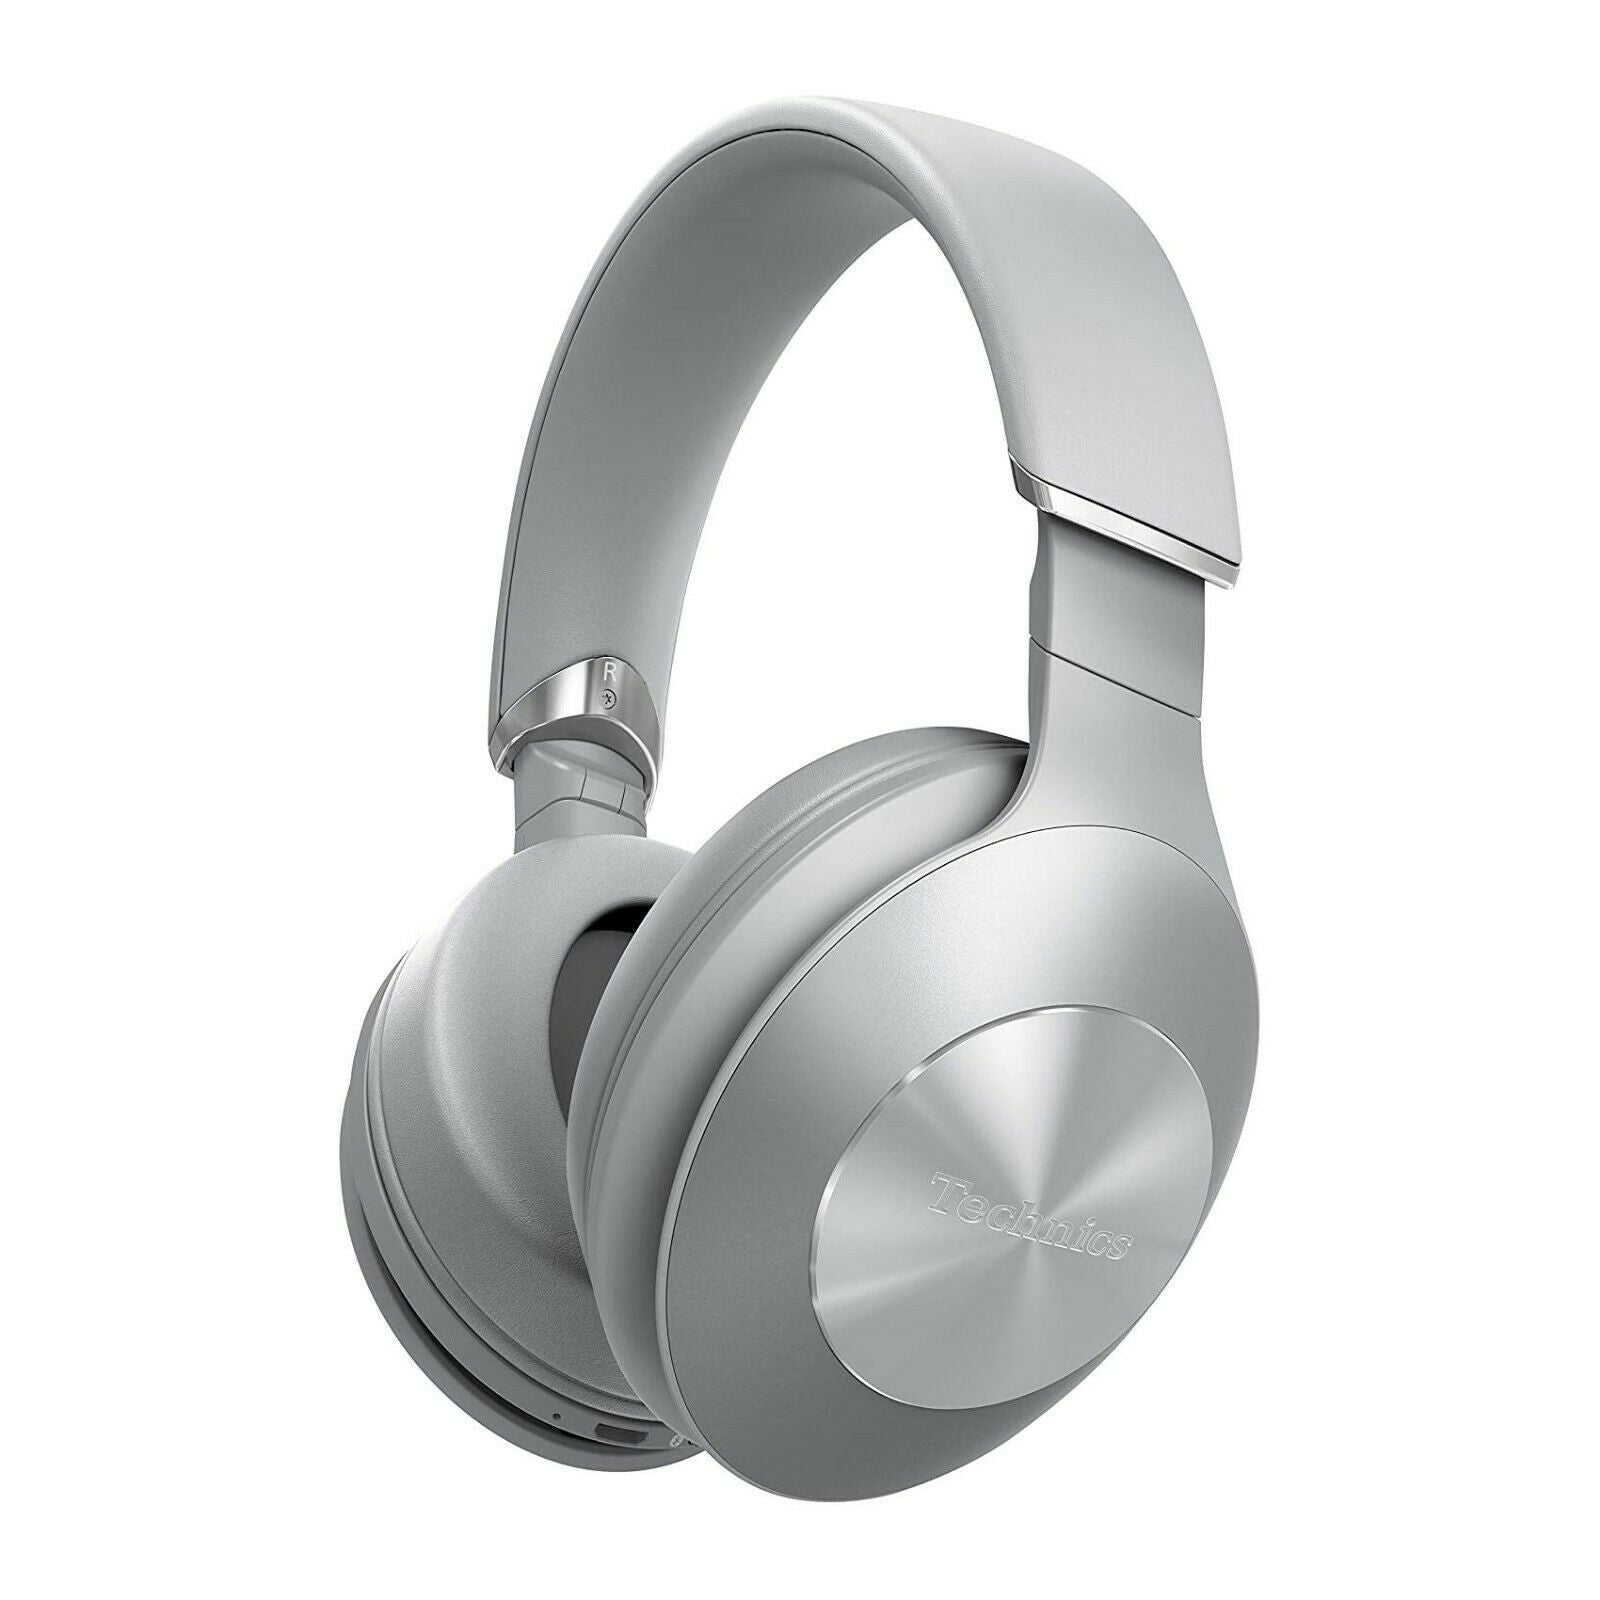 Technics F50 Wireless Bluetooth High Resolution Audio Over-Ear Headphones - Silver